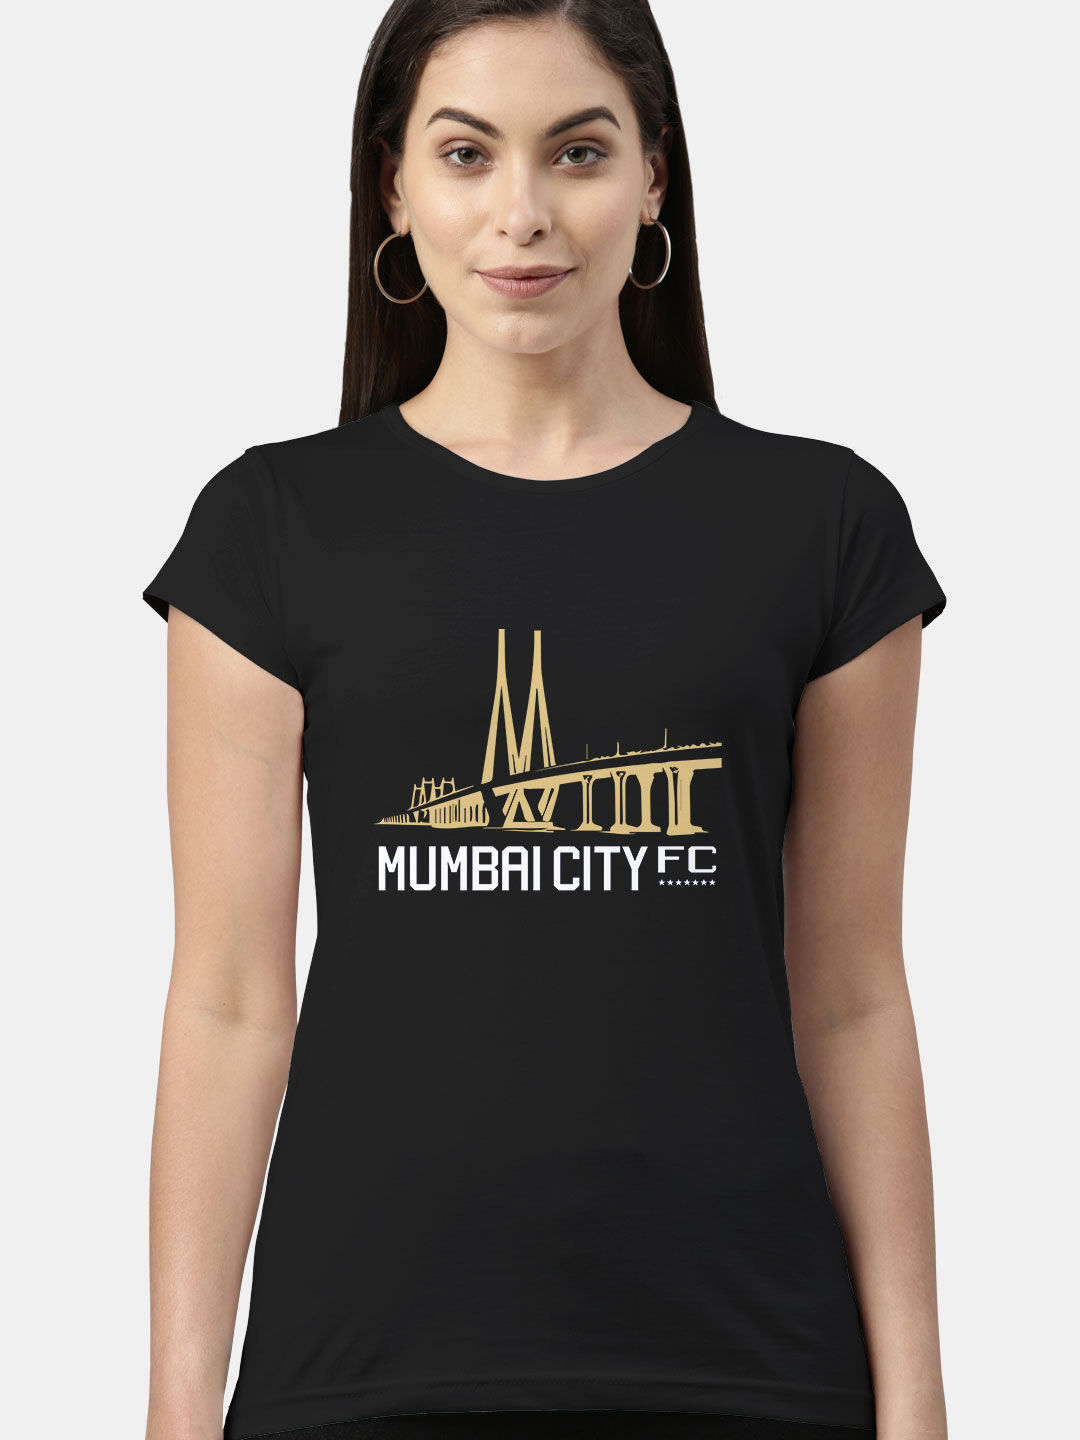 Buy MCFC Mumbai City - Female Designer T-Shirts Black T-Shirts Online